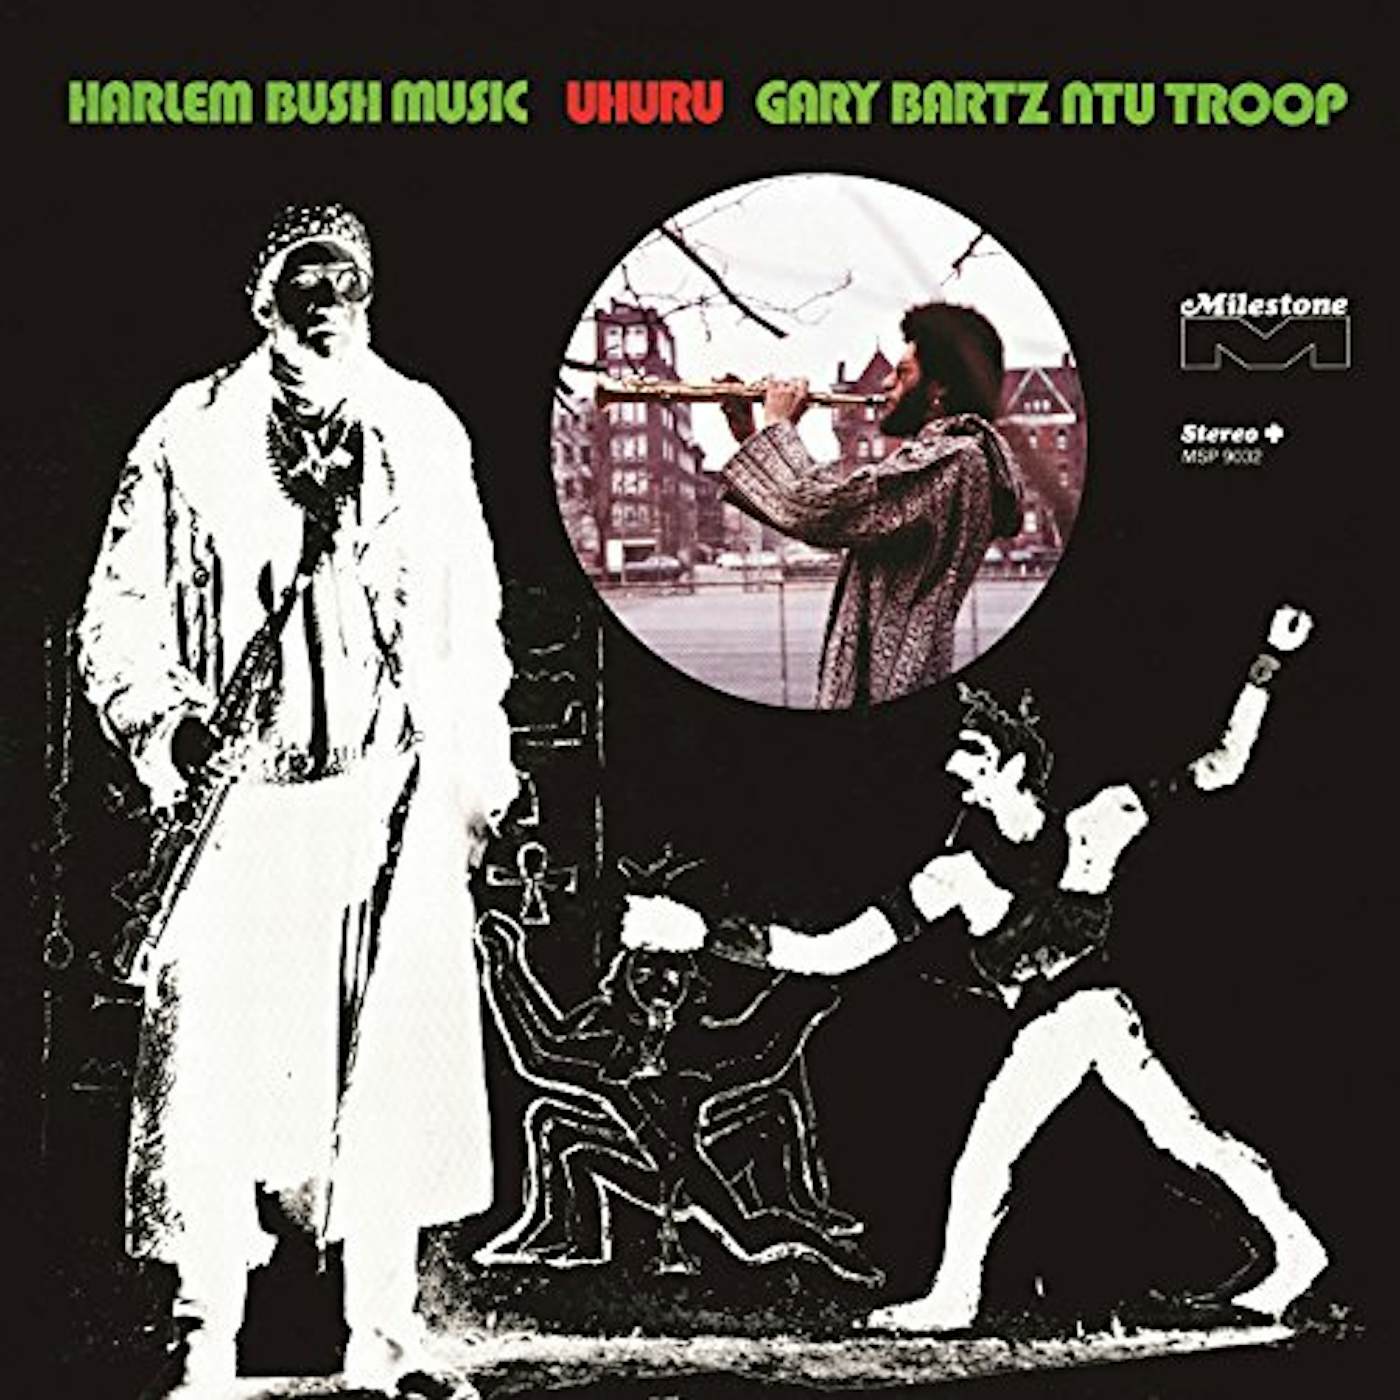 Gary Bartz Ntu Troop HARLEM BUSH MUSIC: UHURU Vinyl Record